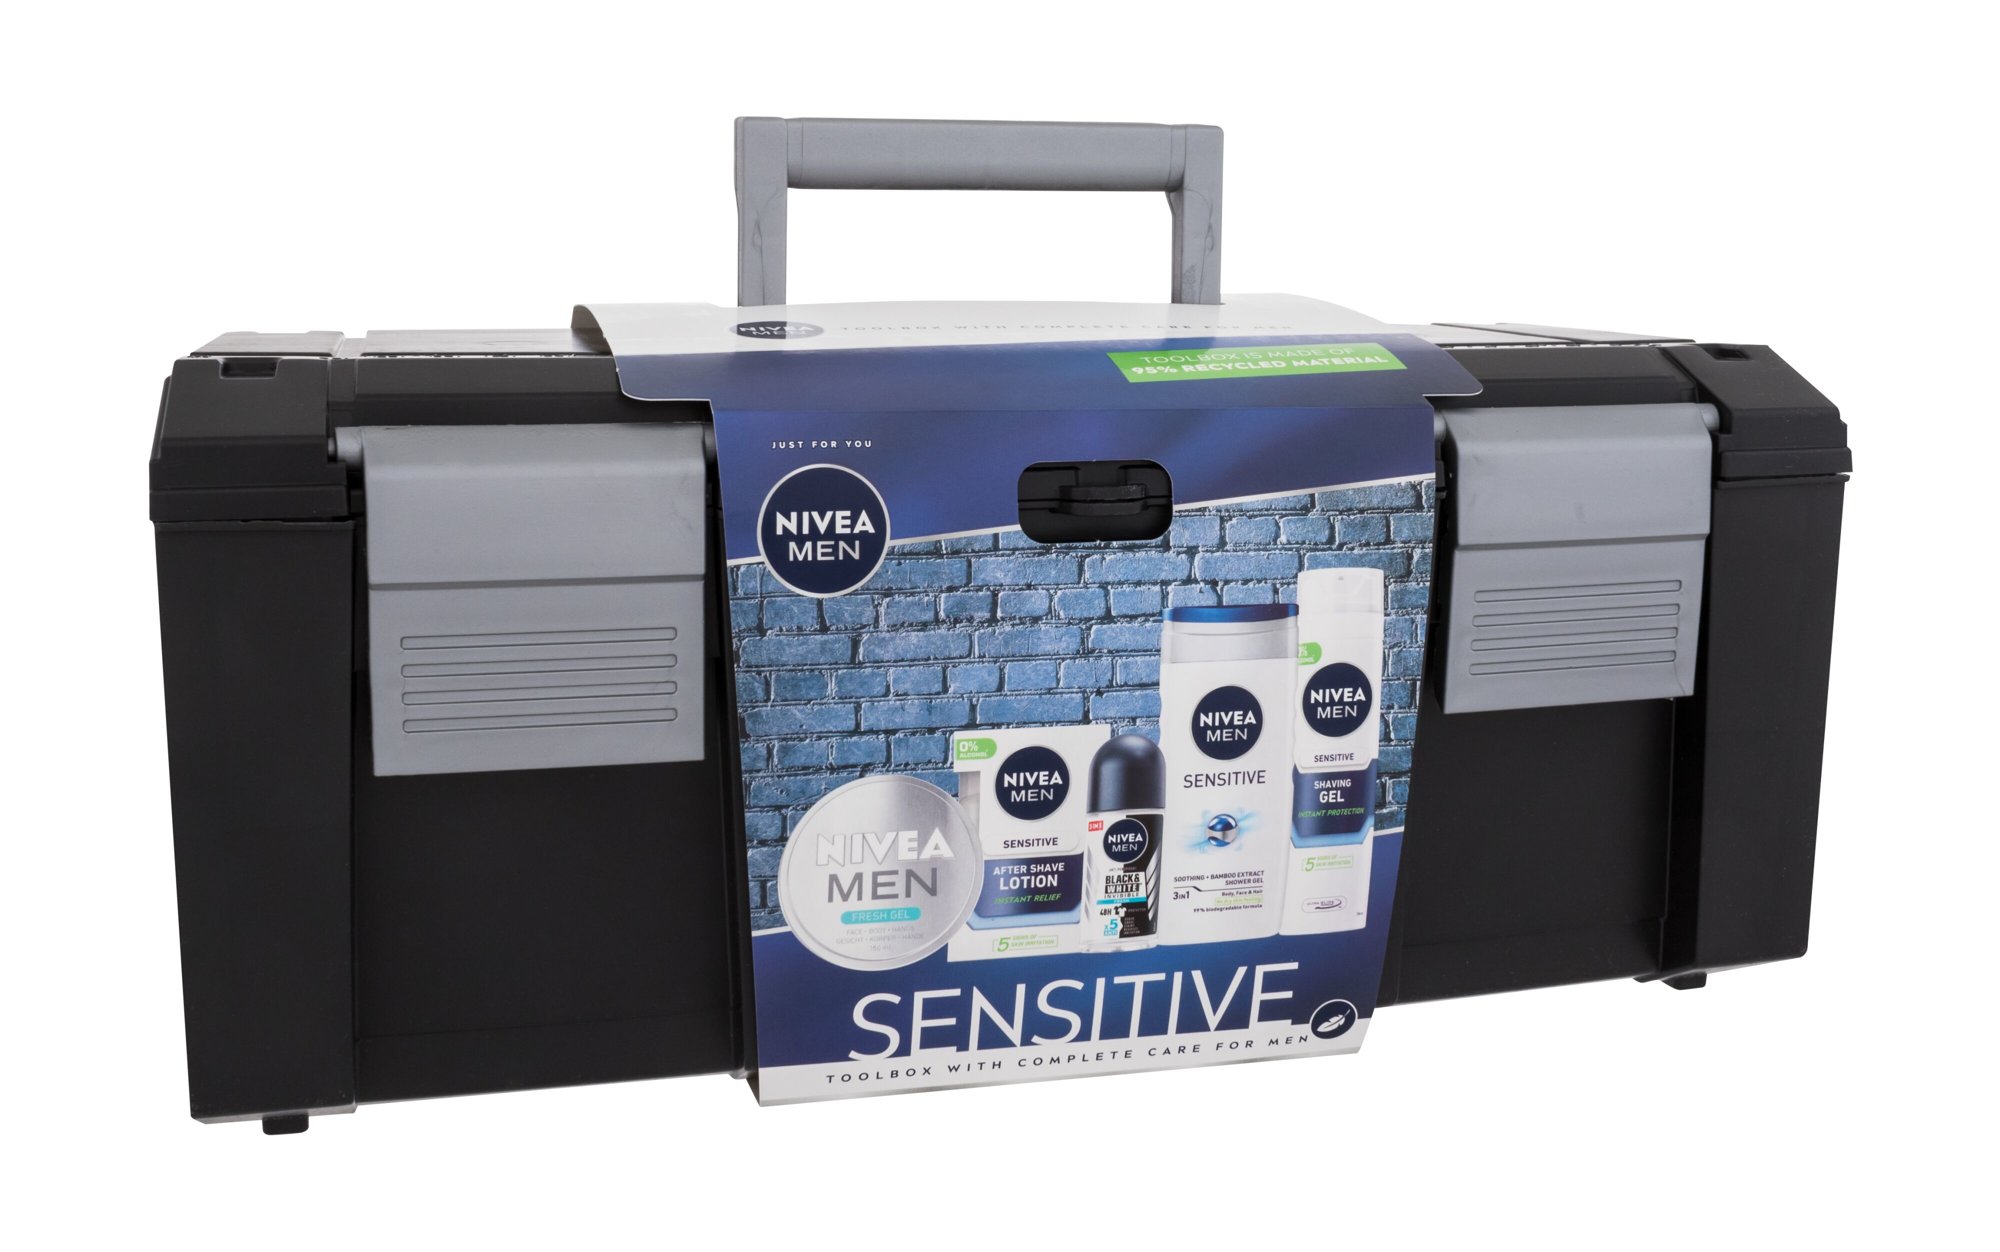 Nivea Men Sensitive Toolbox With Complete Care For Men vanduo po skutimosi